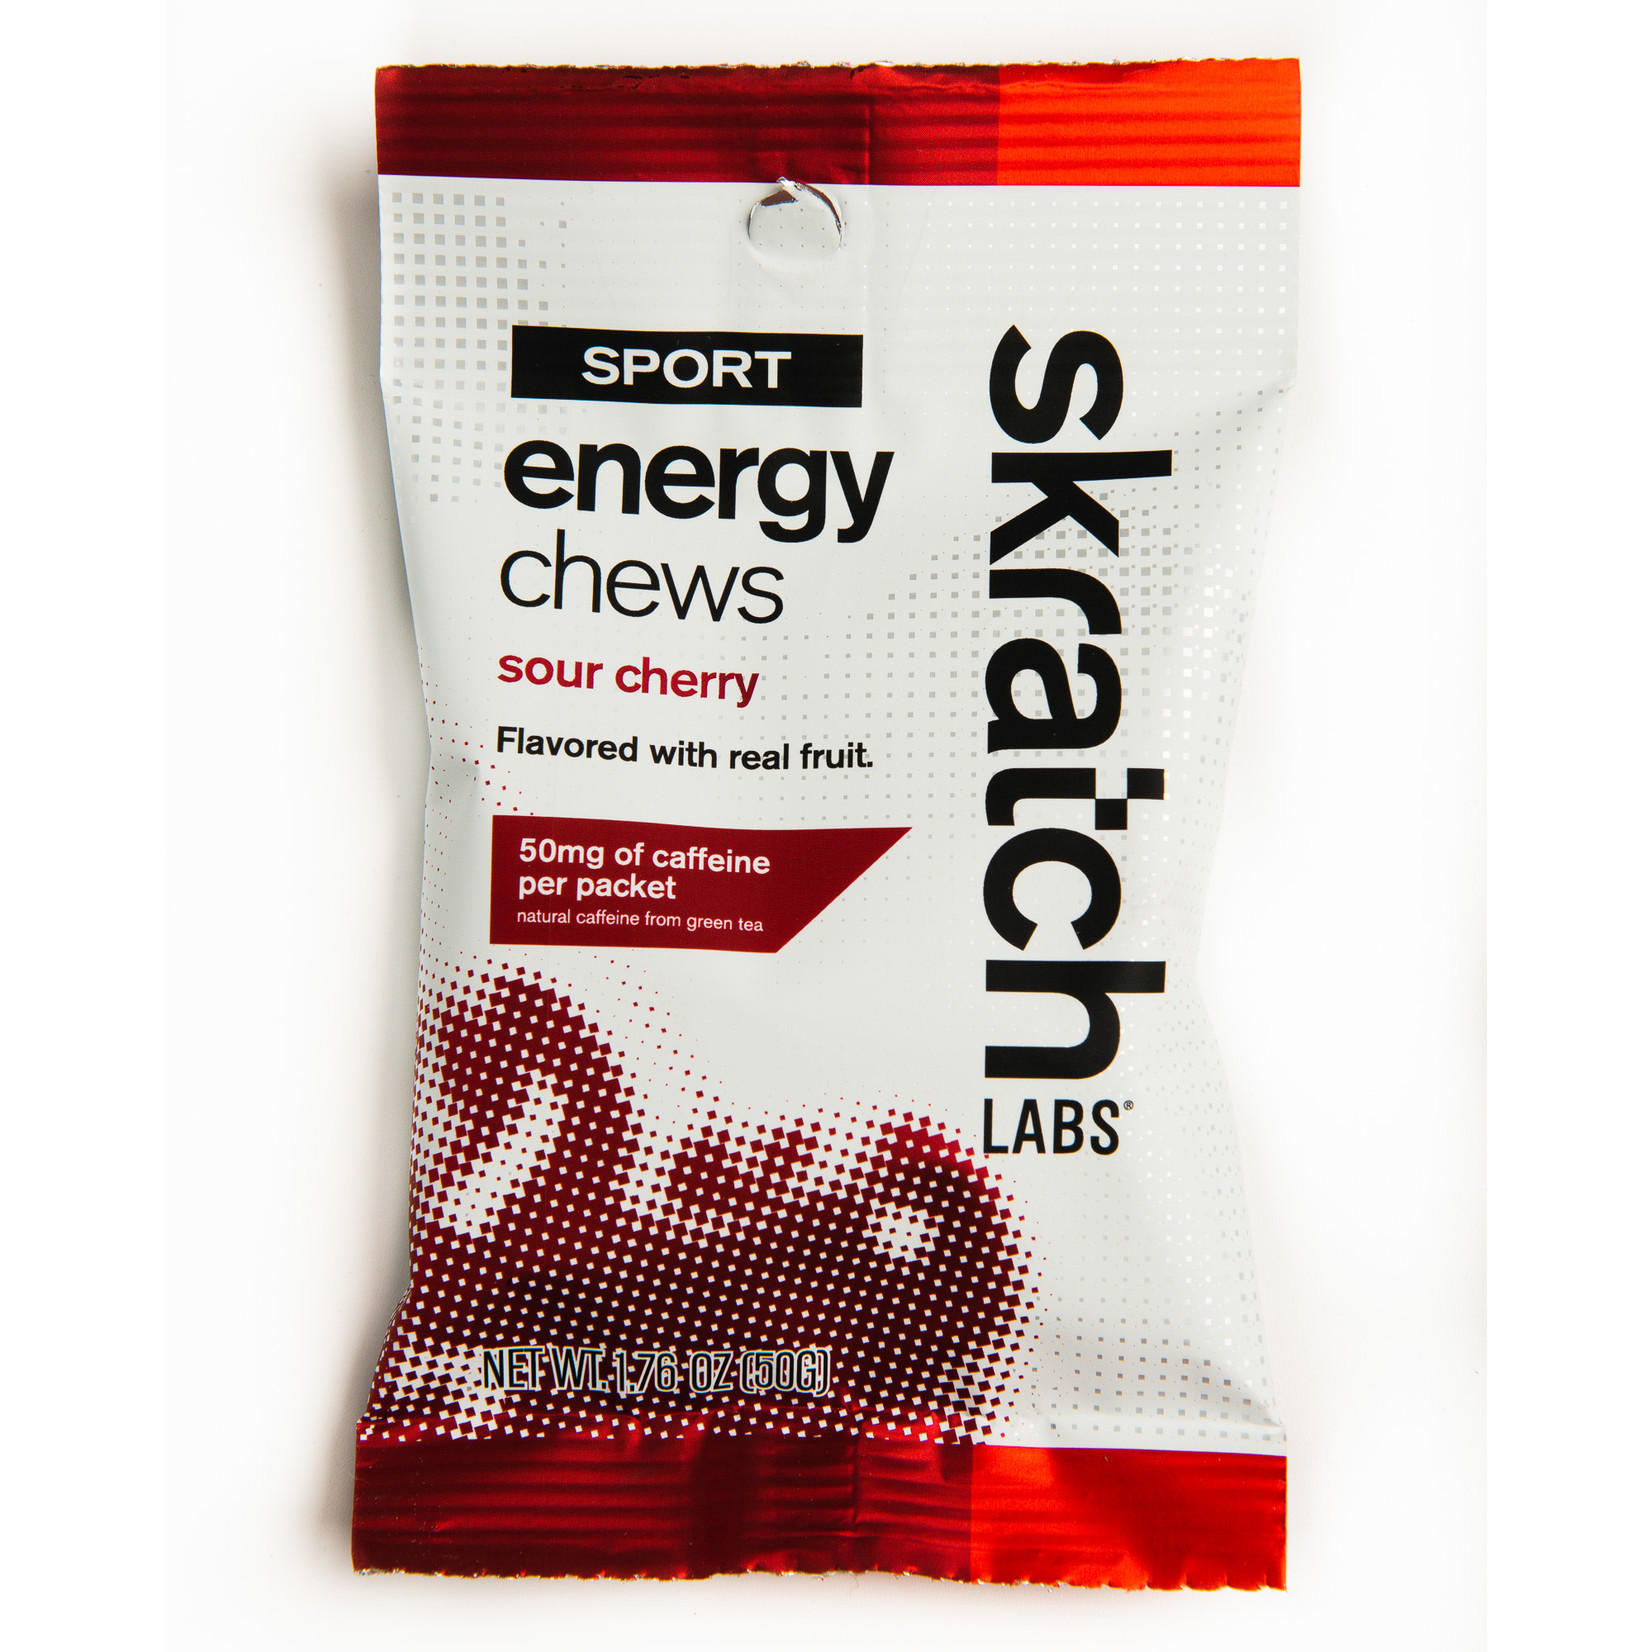 Skratch Labs Skratch Labs Sport Energy Chews Sour Cherry single